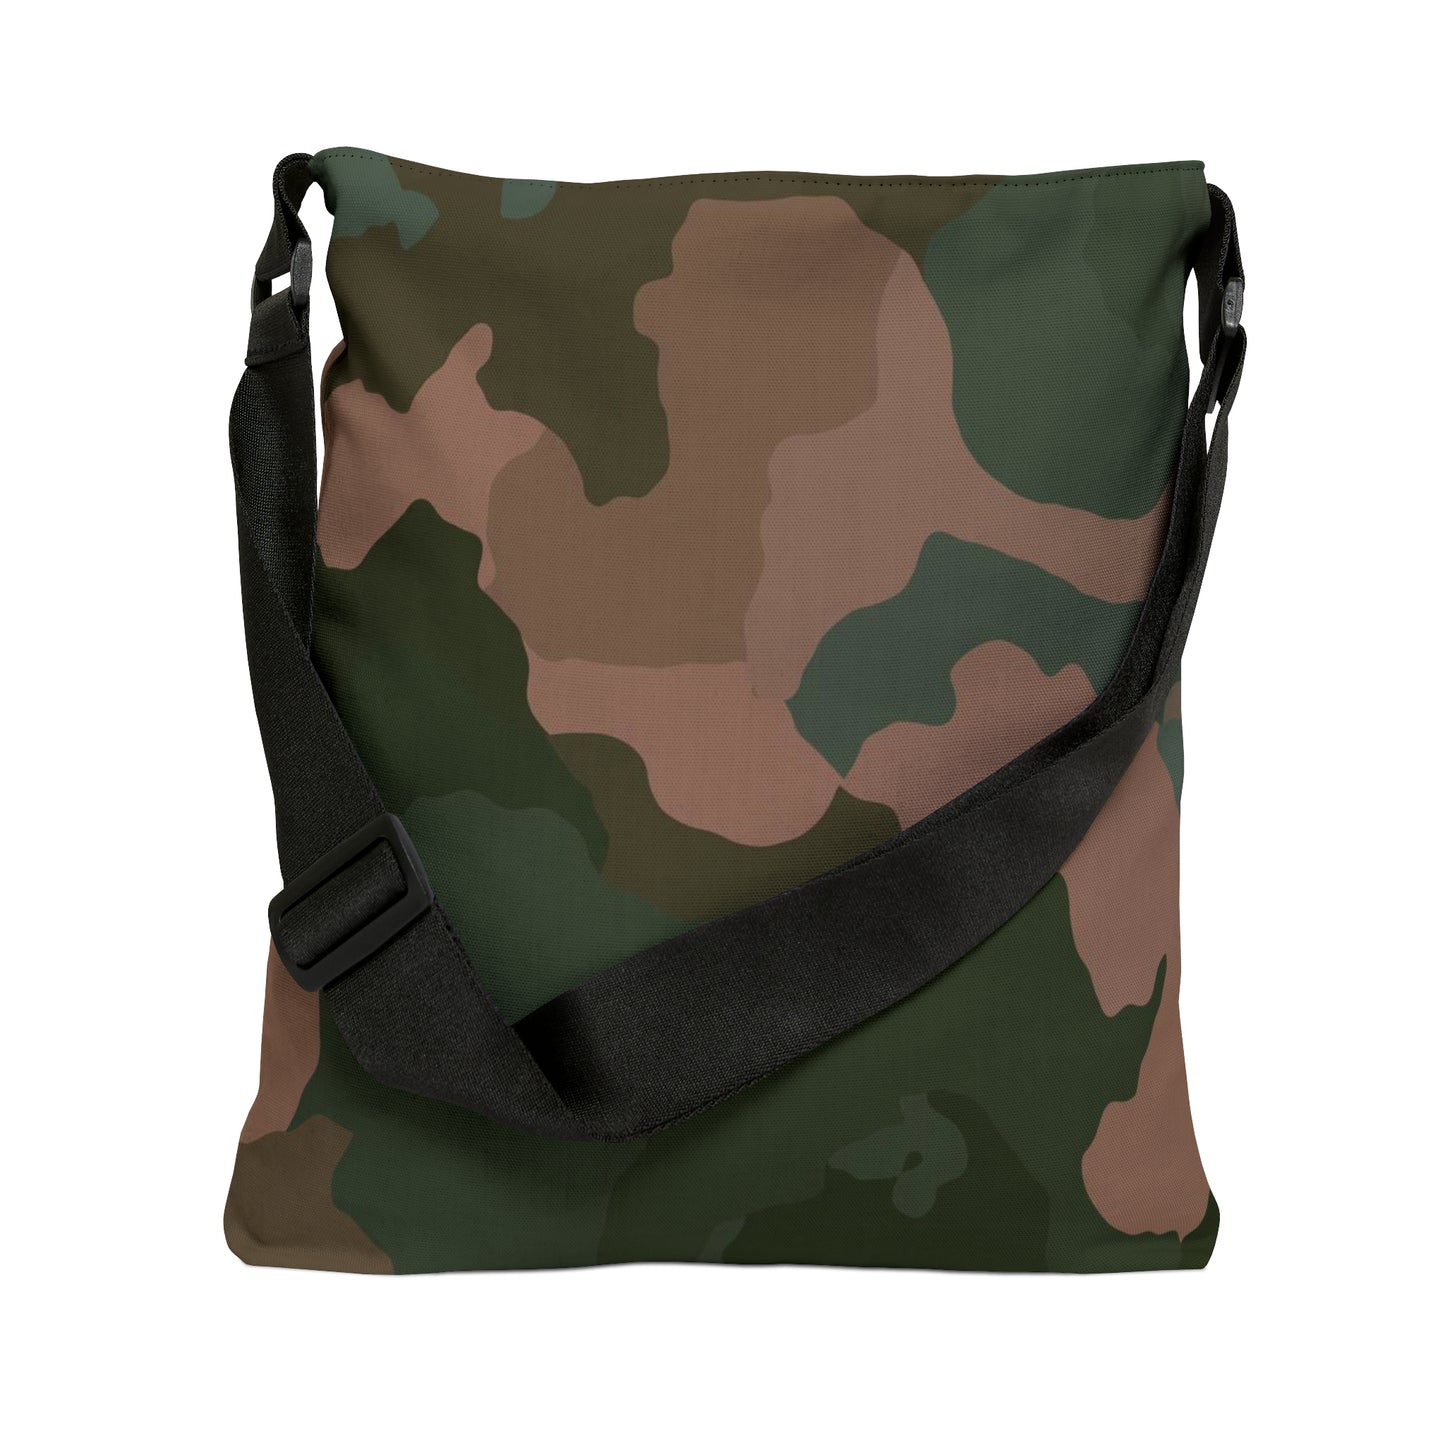 Adjustable Tote Bag camo